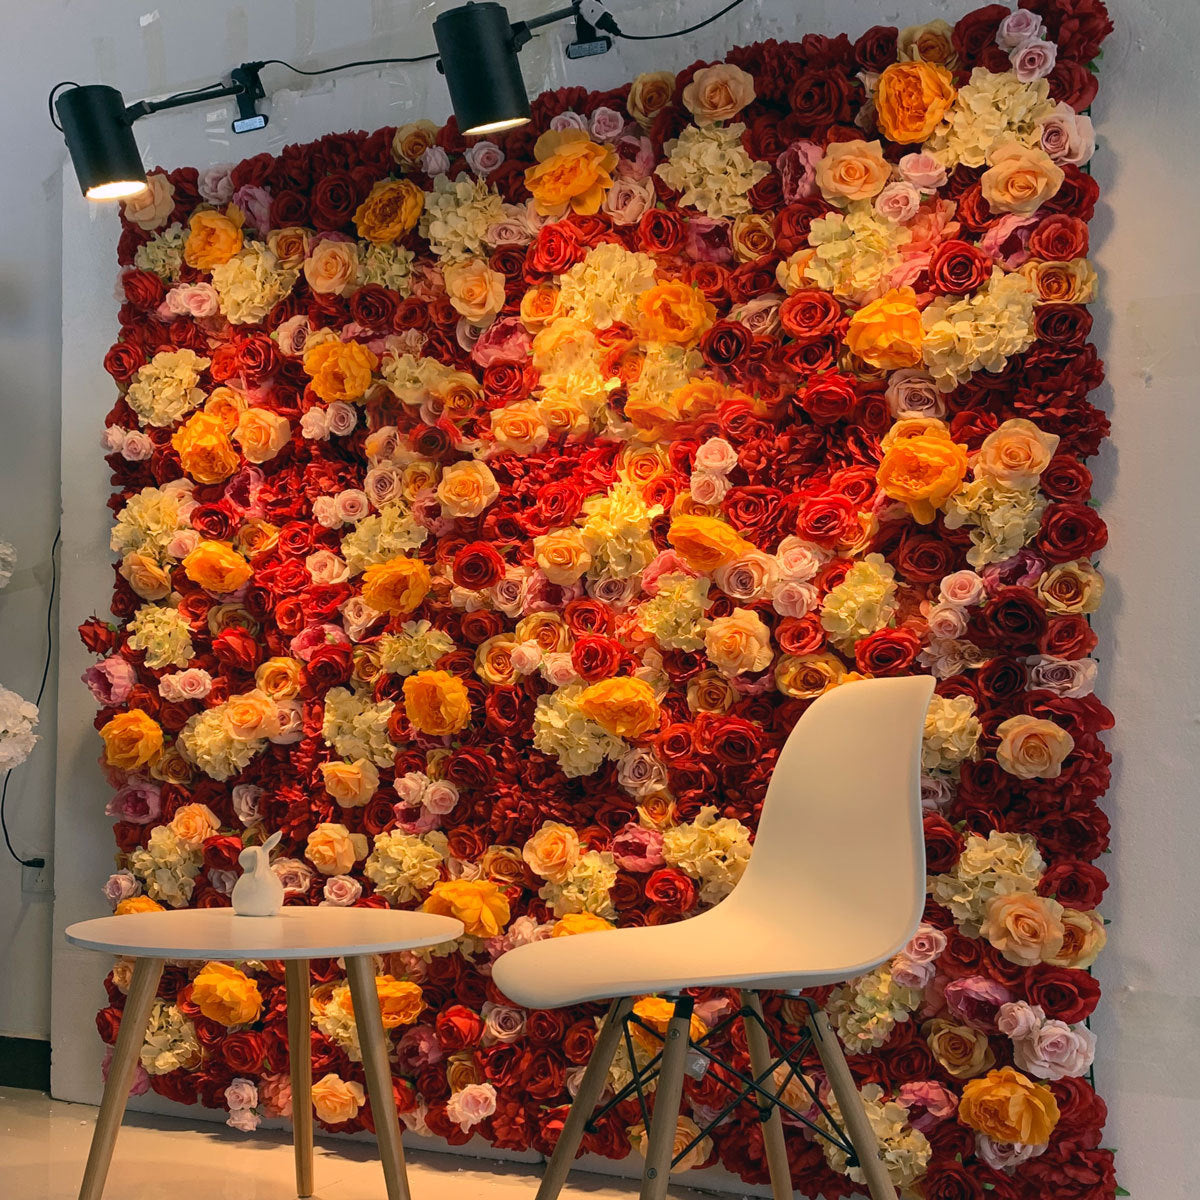 3D Artificial Flower Wall Arrangement Wedding Party Birthday Backdrop Decor HQ1193